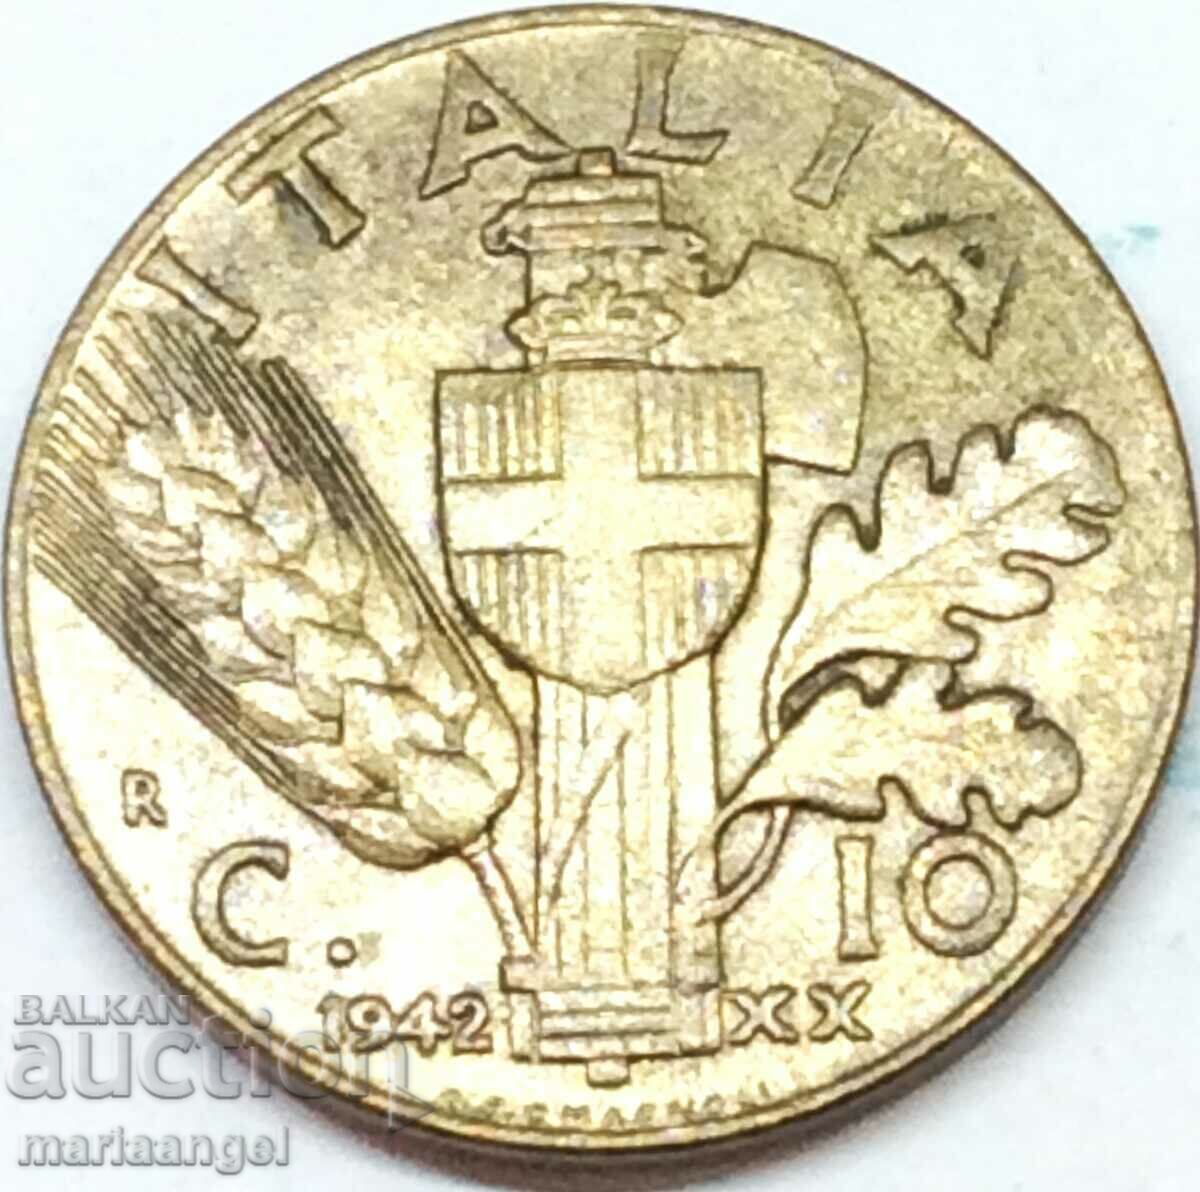 1942 10 centesimi Italy brass